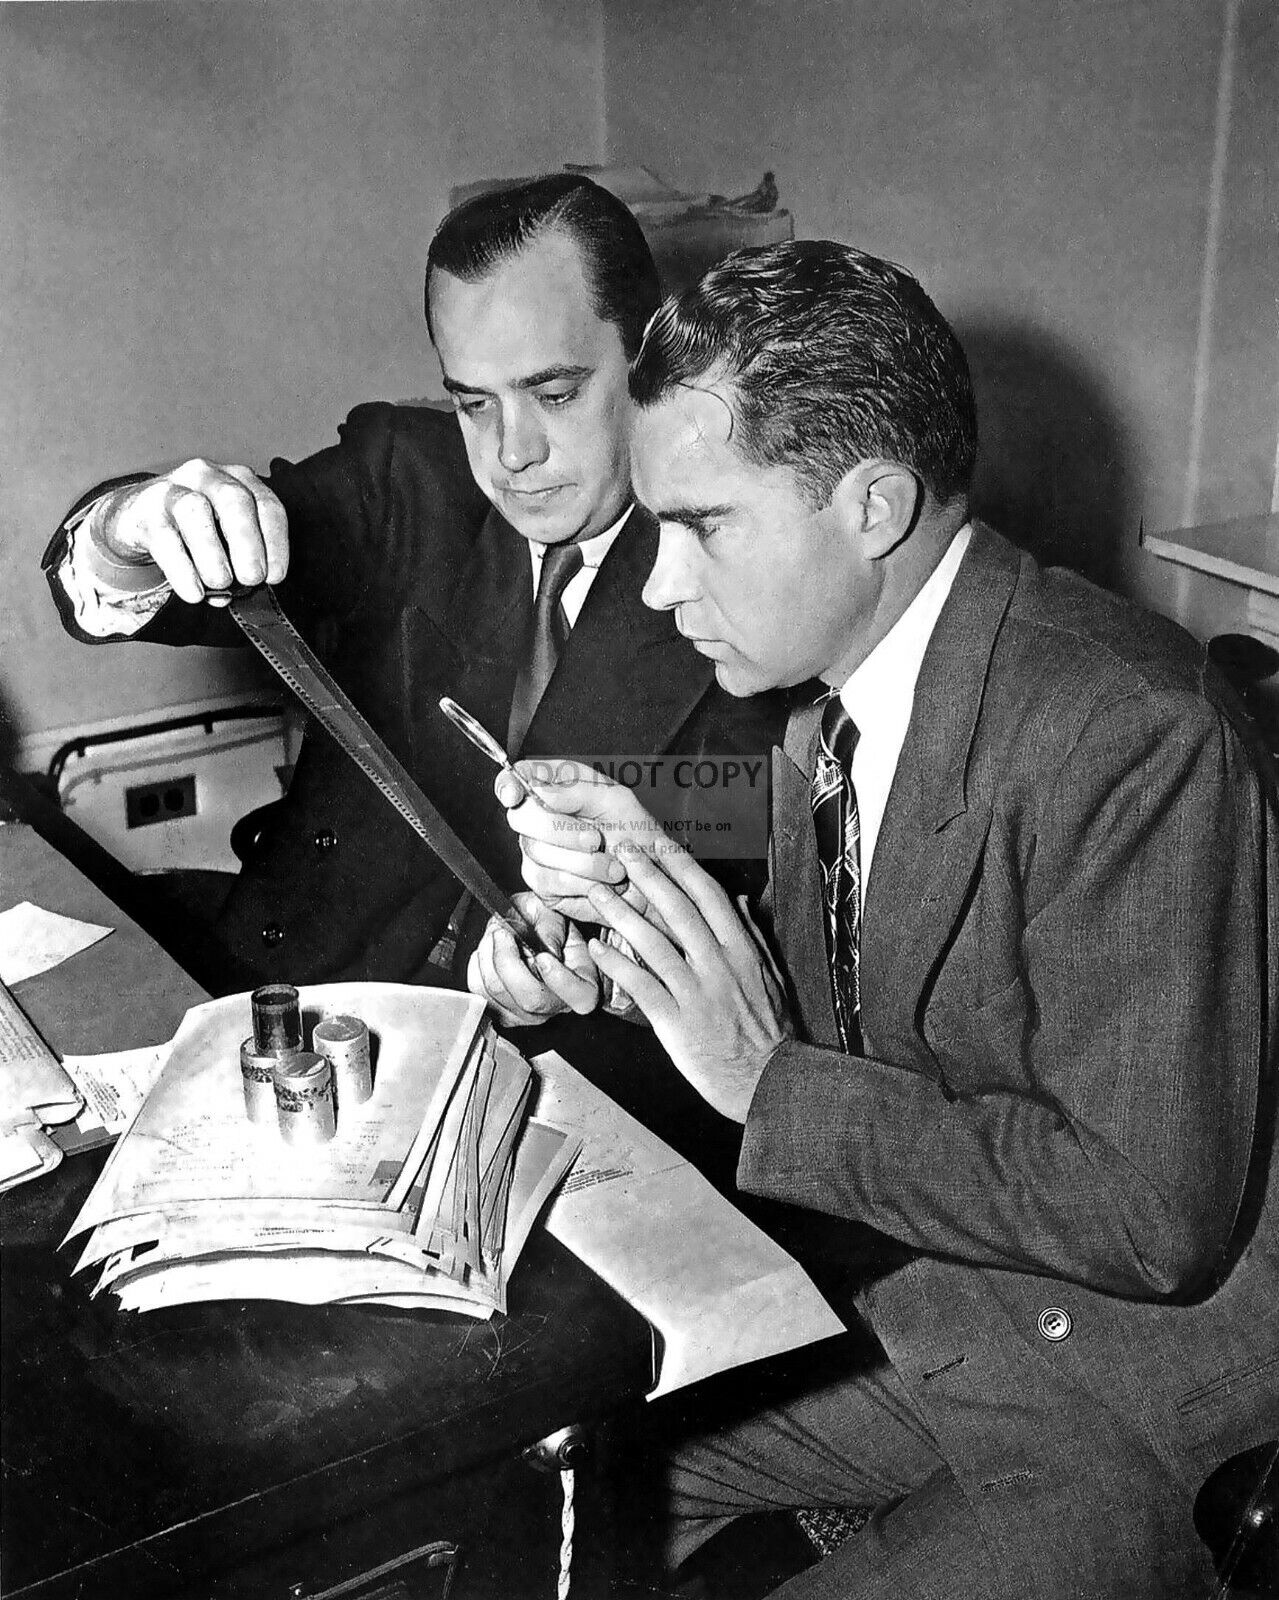 RICHARD NIXON REVIEWS MICROFILM AS PART OF HUAC IN 1948 - 8X10 PHOTO (AB-732)